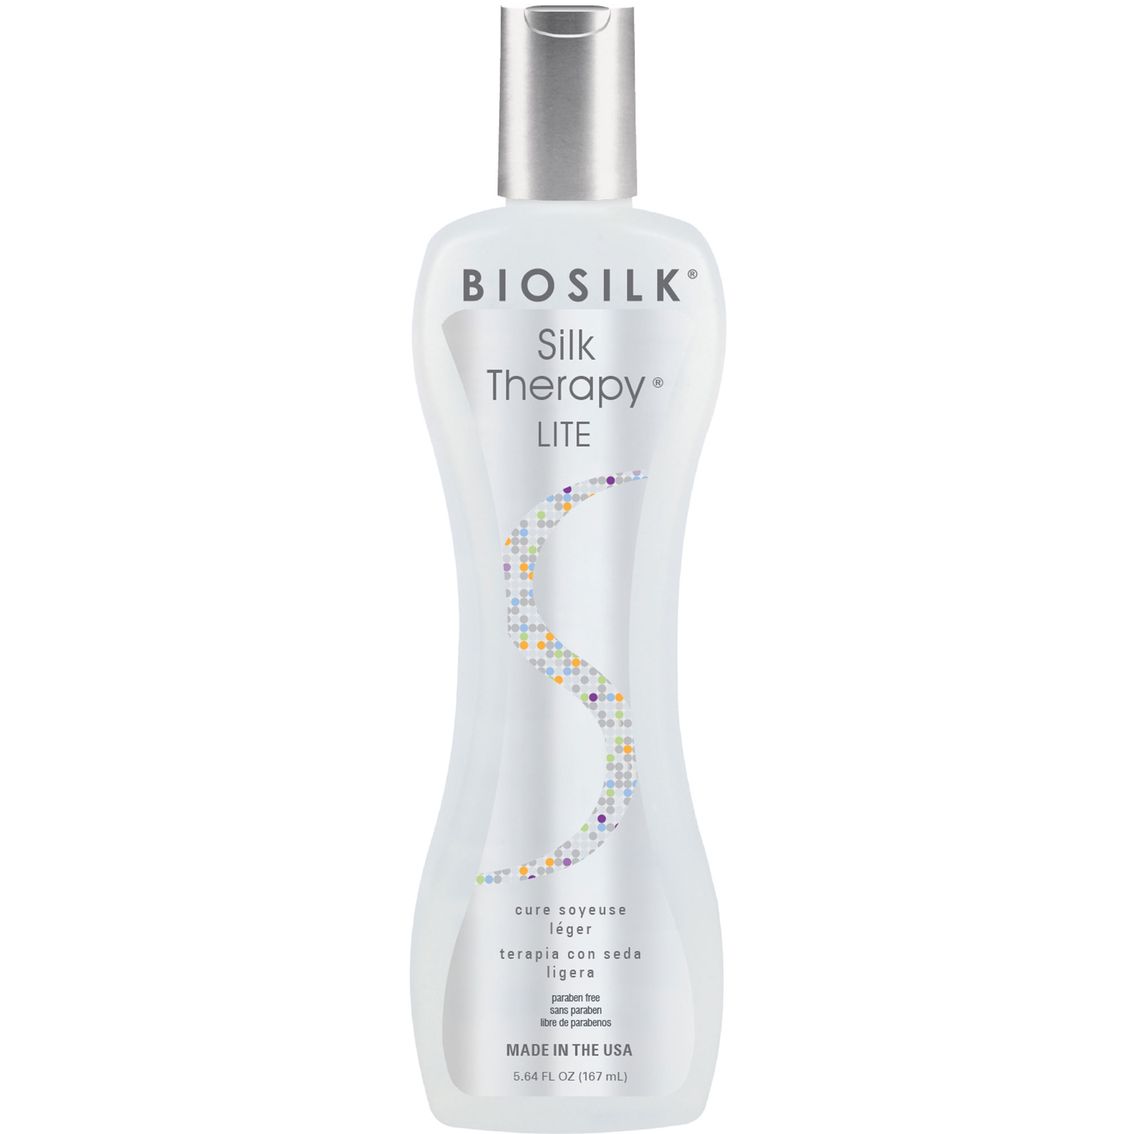 Biosilk Silk Therapy Lite 150ml